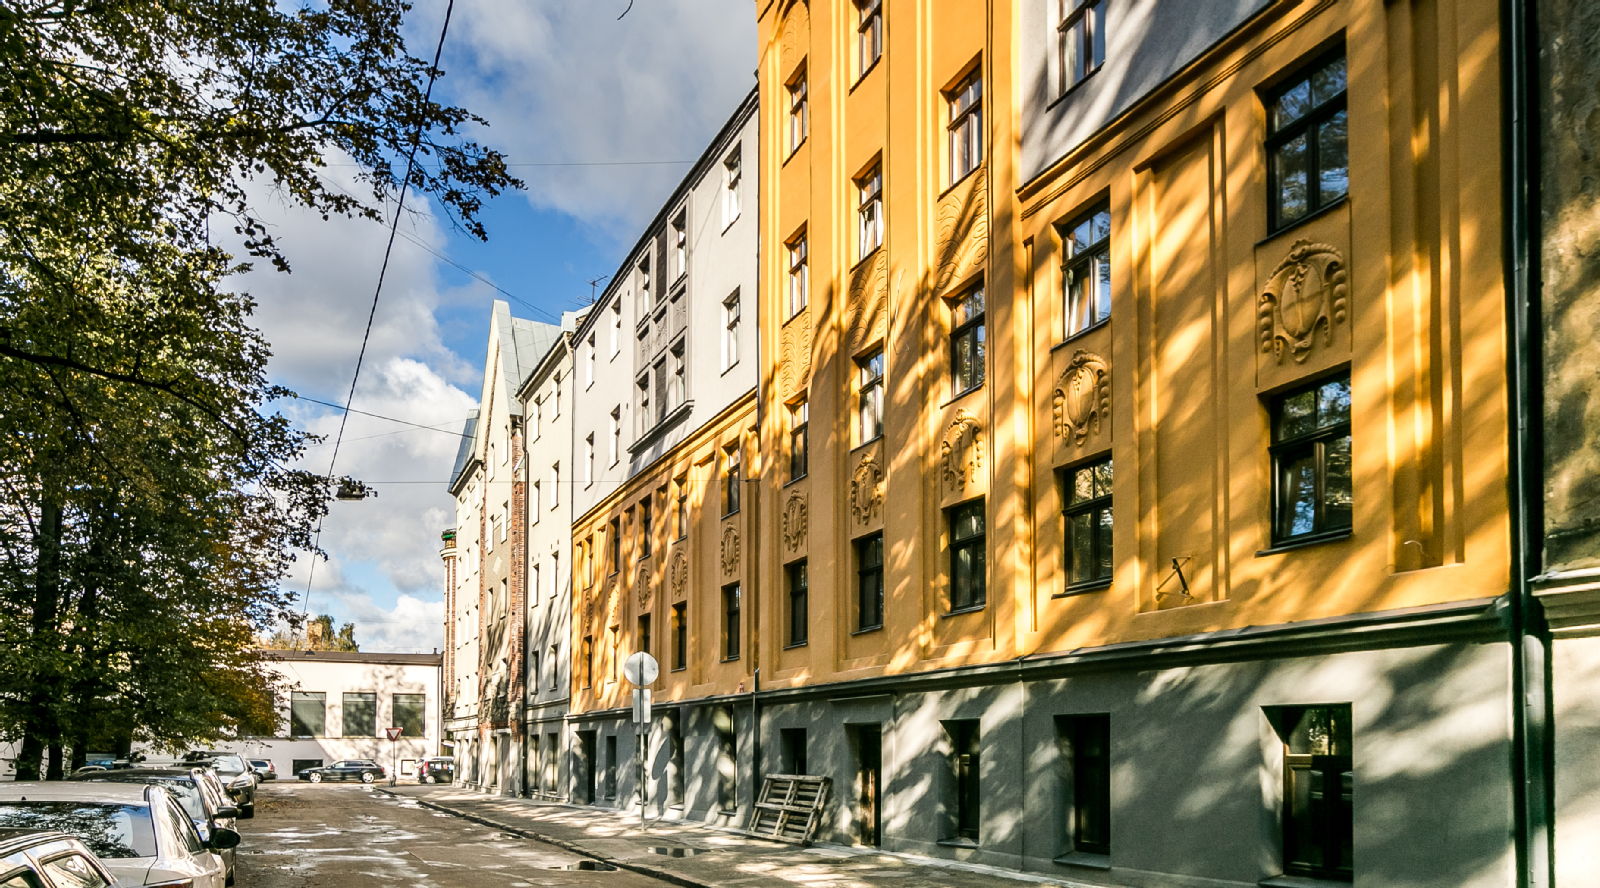 Atvērto durvju dienas - noķer Lielo lomu Rīgas centra jaunajos projektos - Nekustamo īpašumu ziņas - City24.lv nekustamo īpašumu sludinājumu portāls